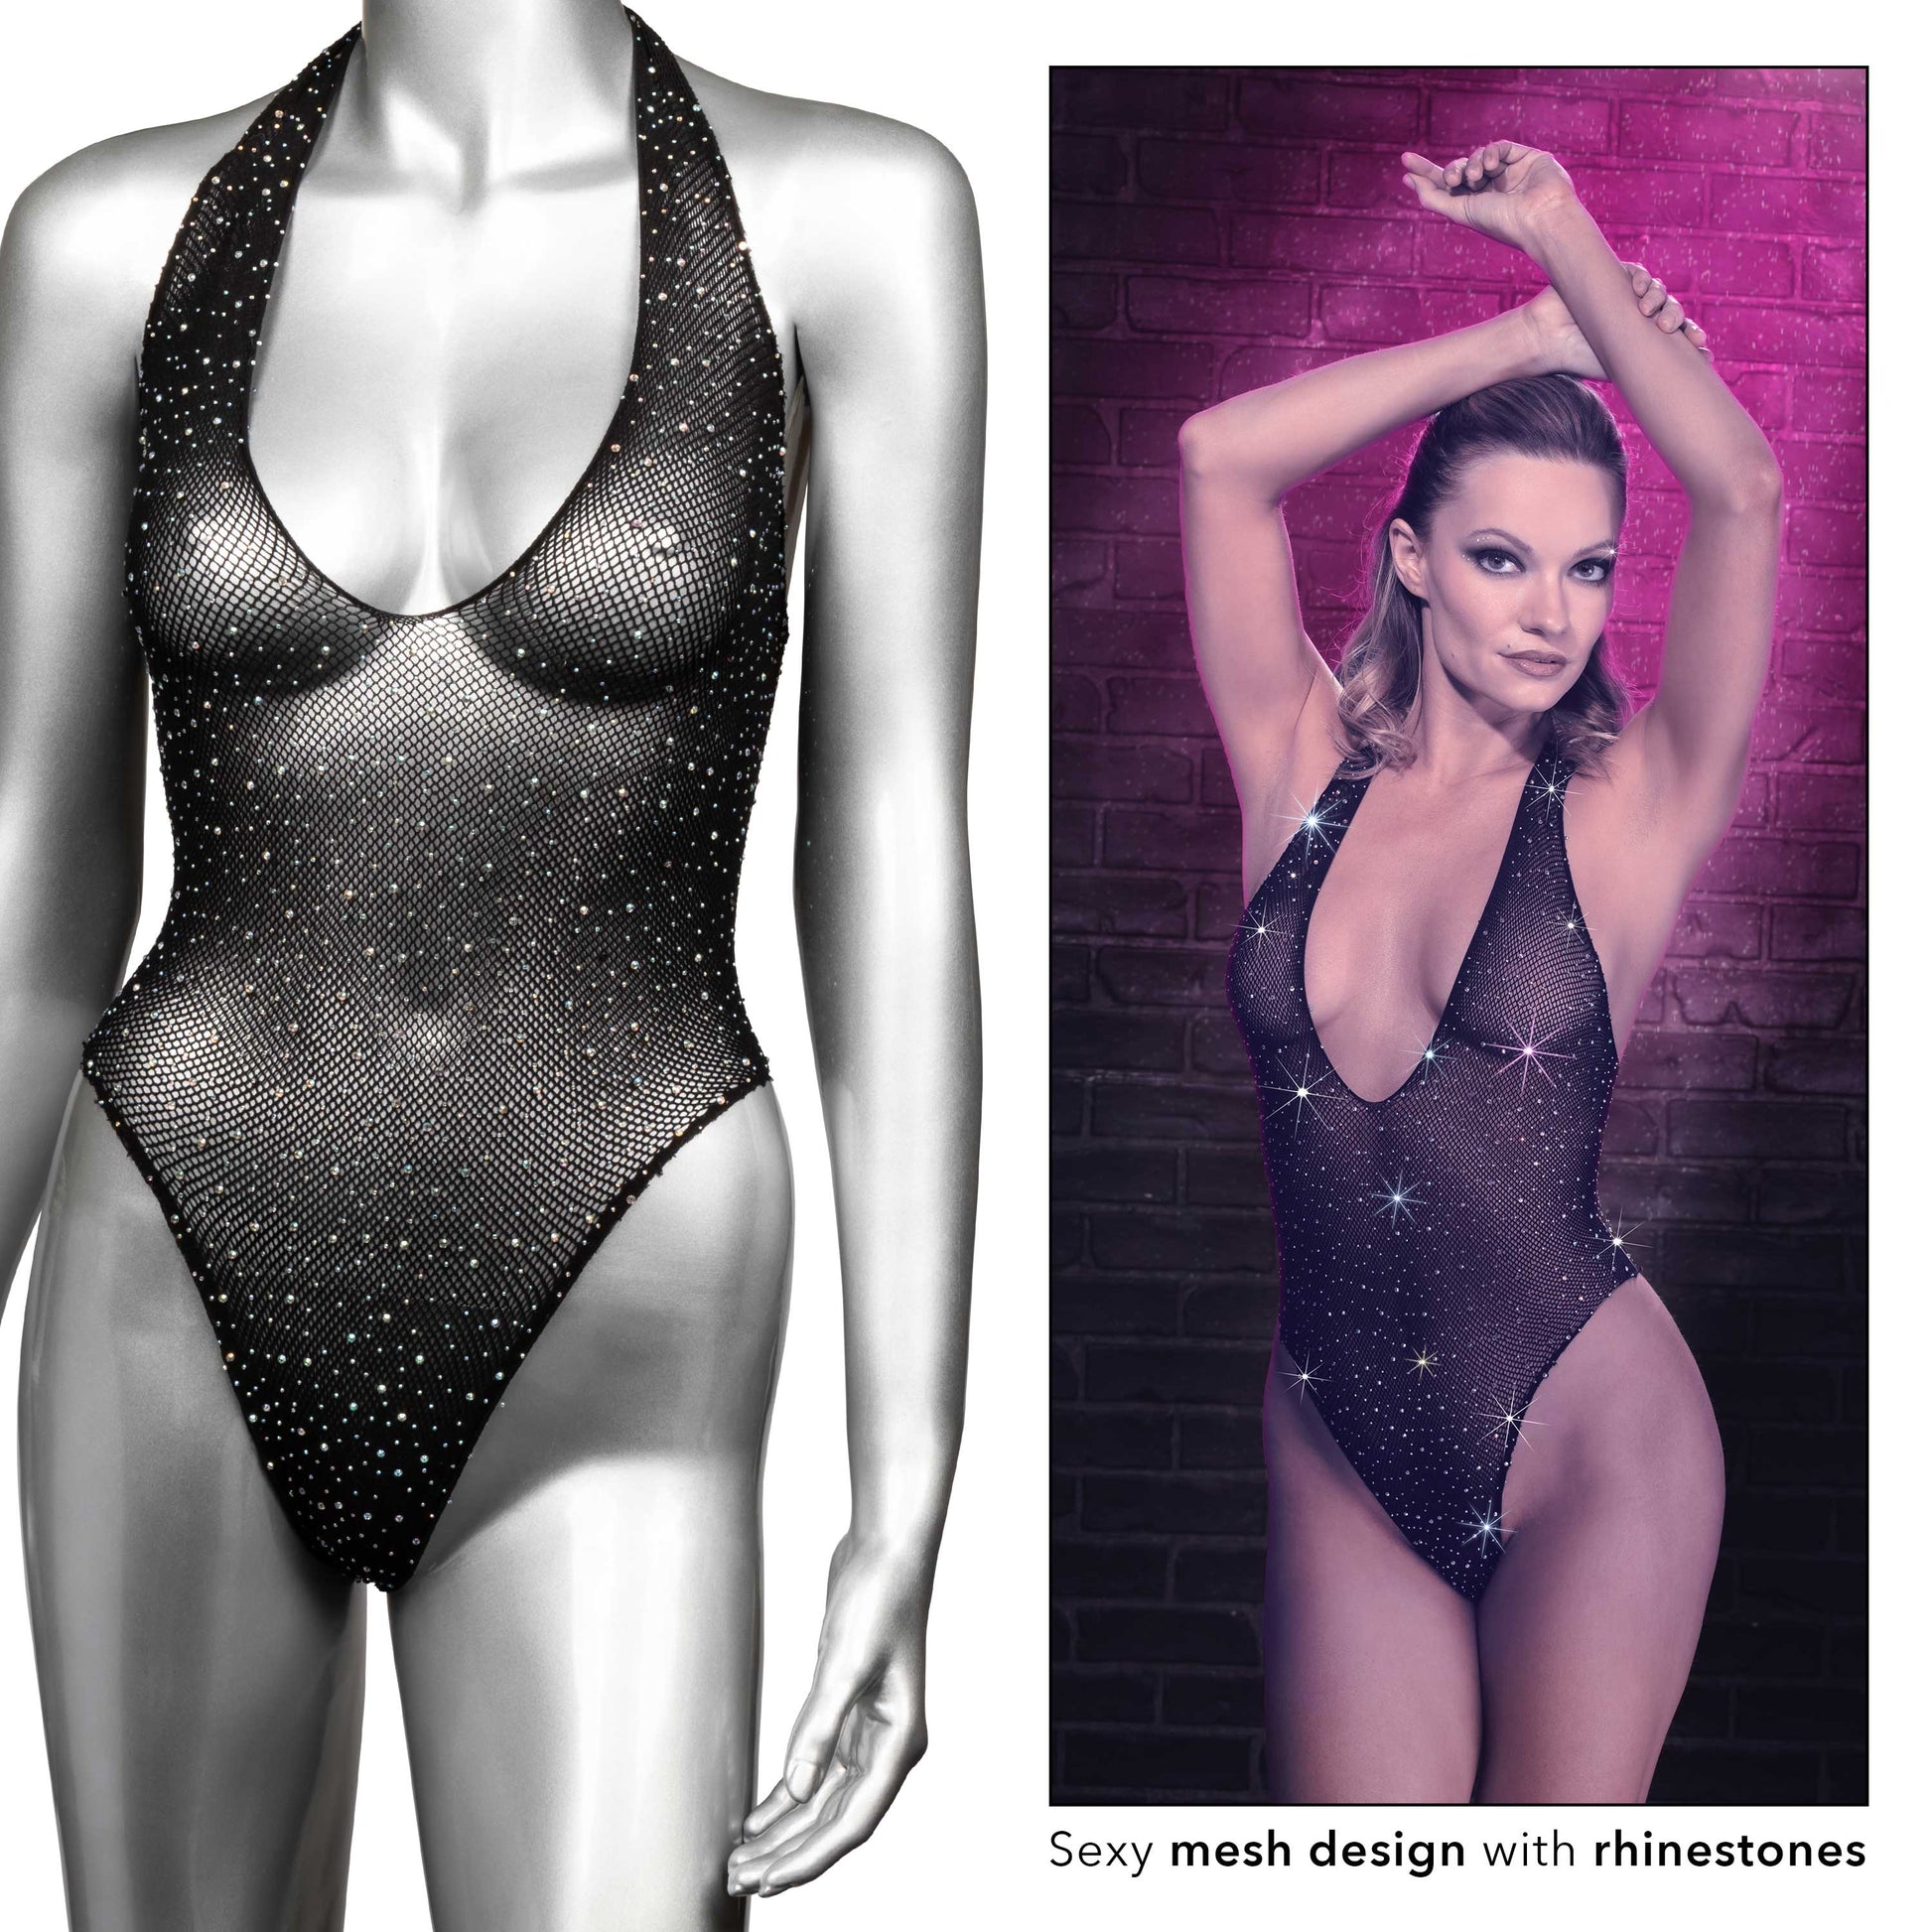 Radiance Deep v Body Suit - One Size - Black SE3002053